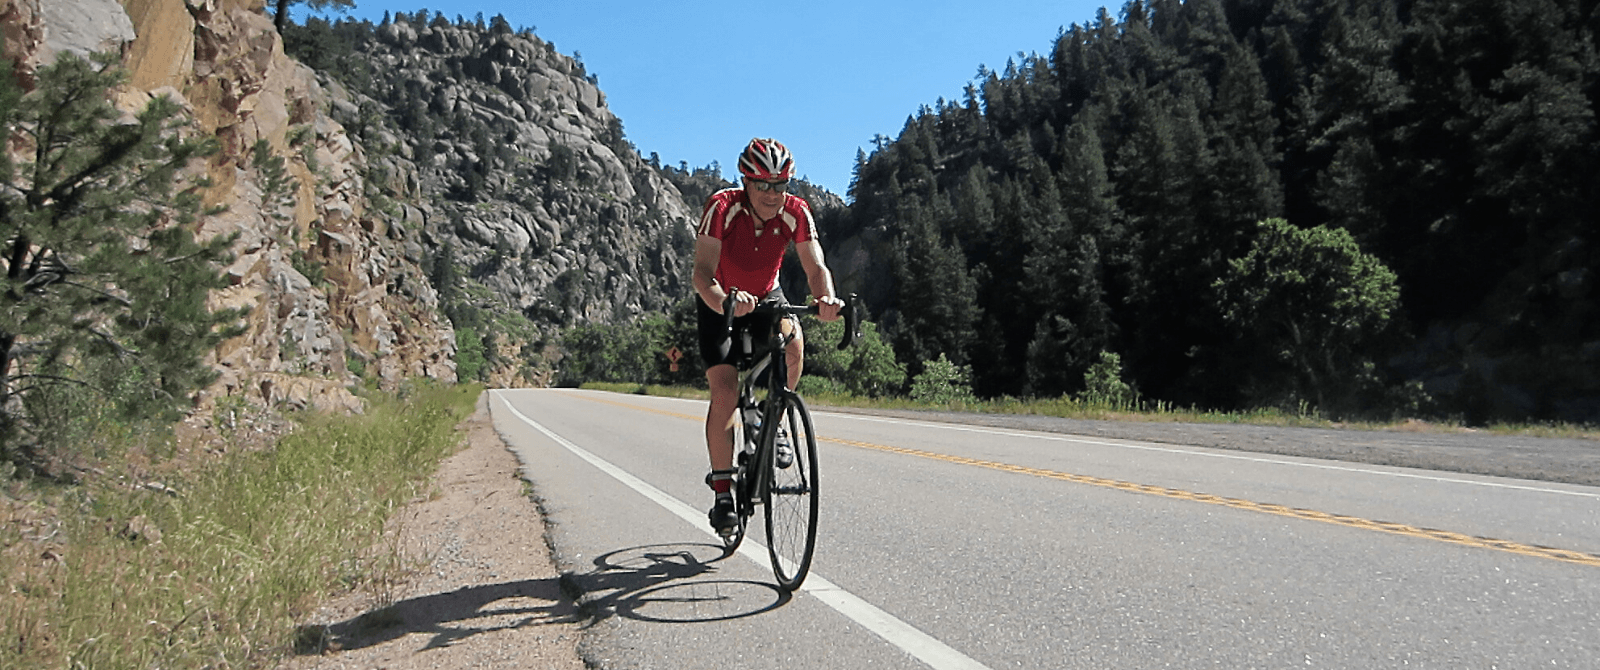 trek bikes boulder colorado